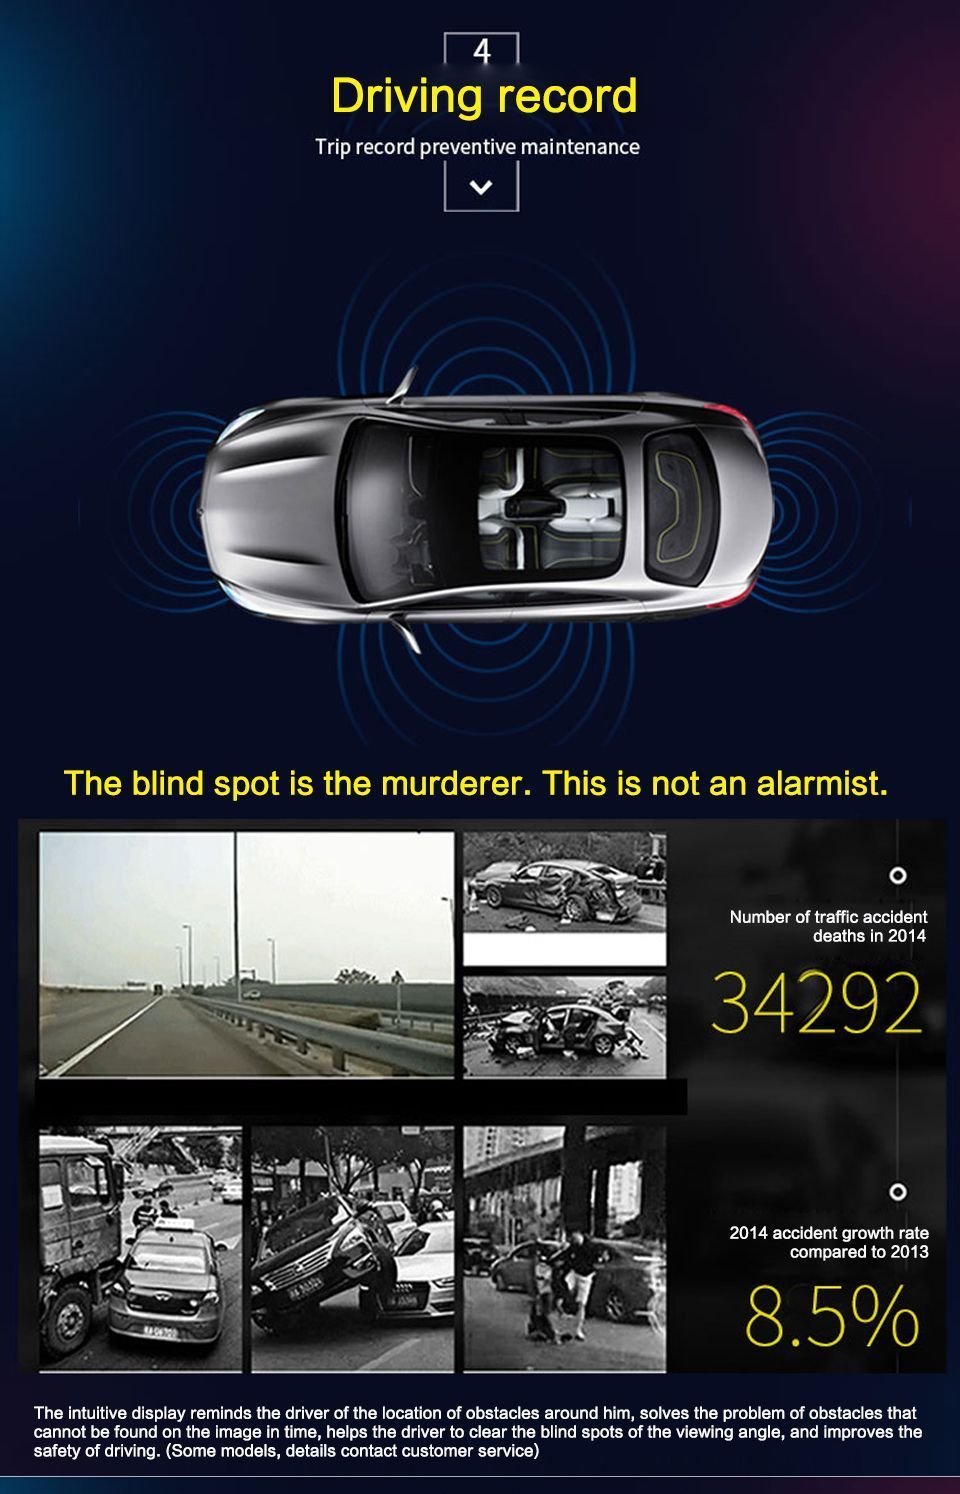 Krando-1080P-for-Cruiser-Car-Super-HD-360-Degree-bird-View-System-Panoramic-View-All-round-Camera-wi-1444747